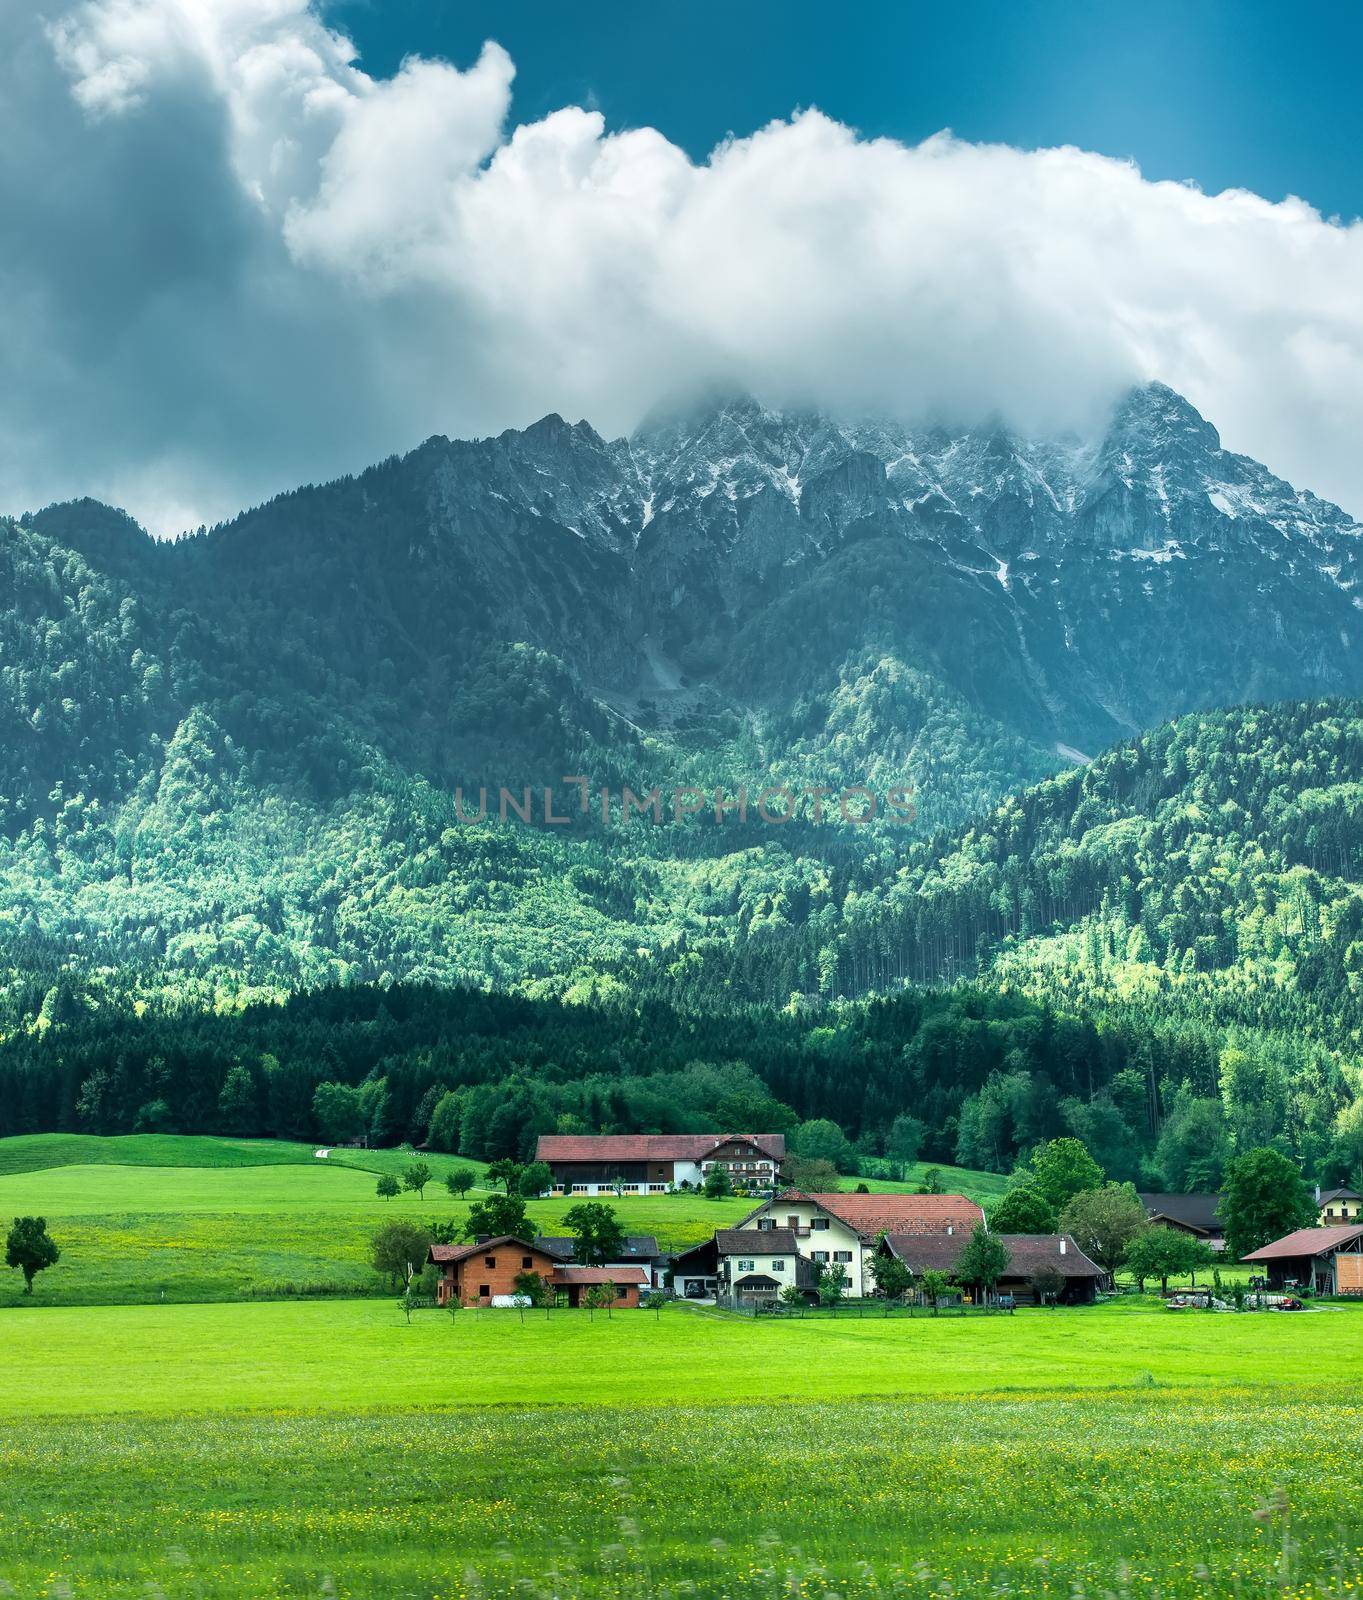 wonderful landscape with village in mountains by GekaSkr